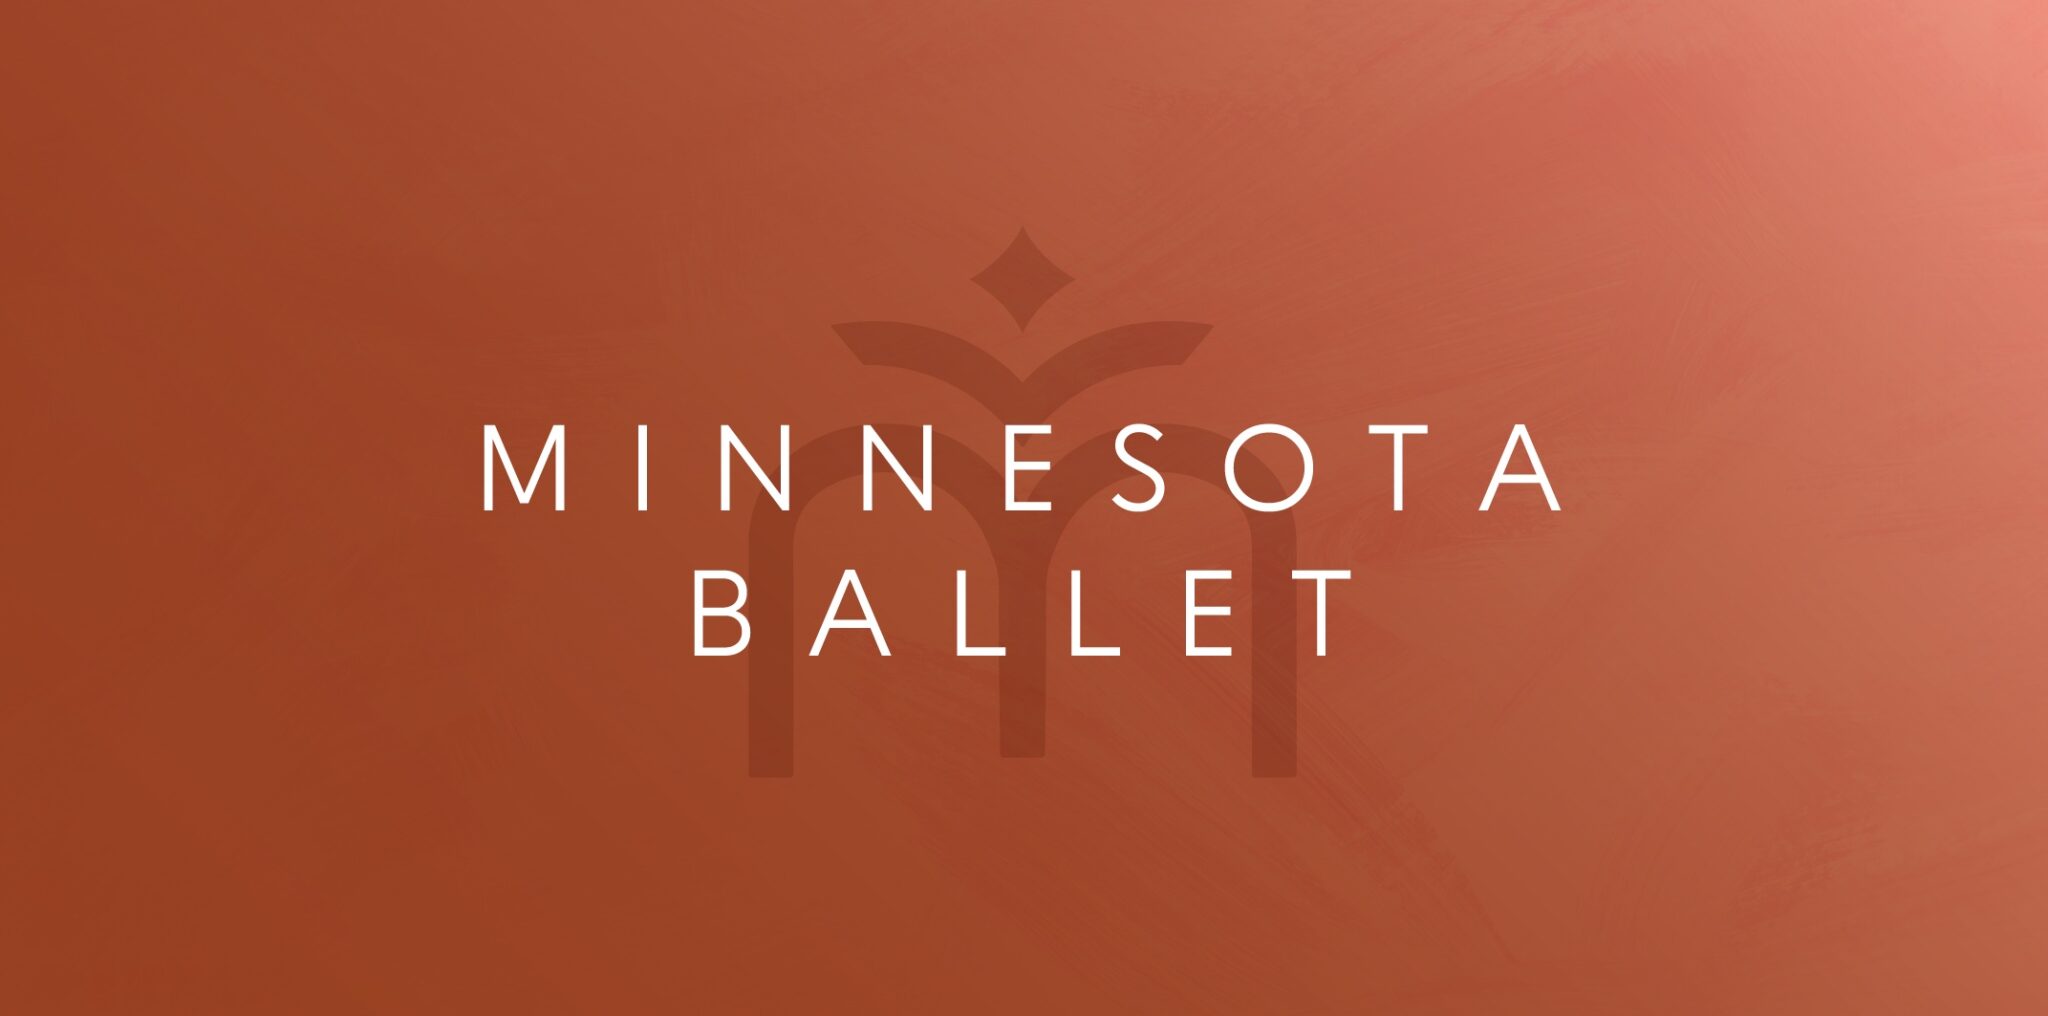 Minnesota Ballet brand design, created by Šek Design Studio